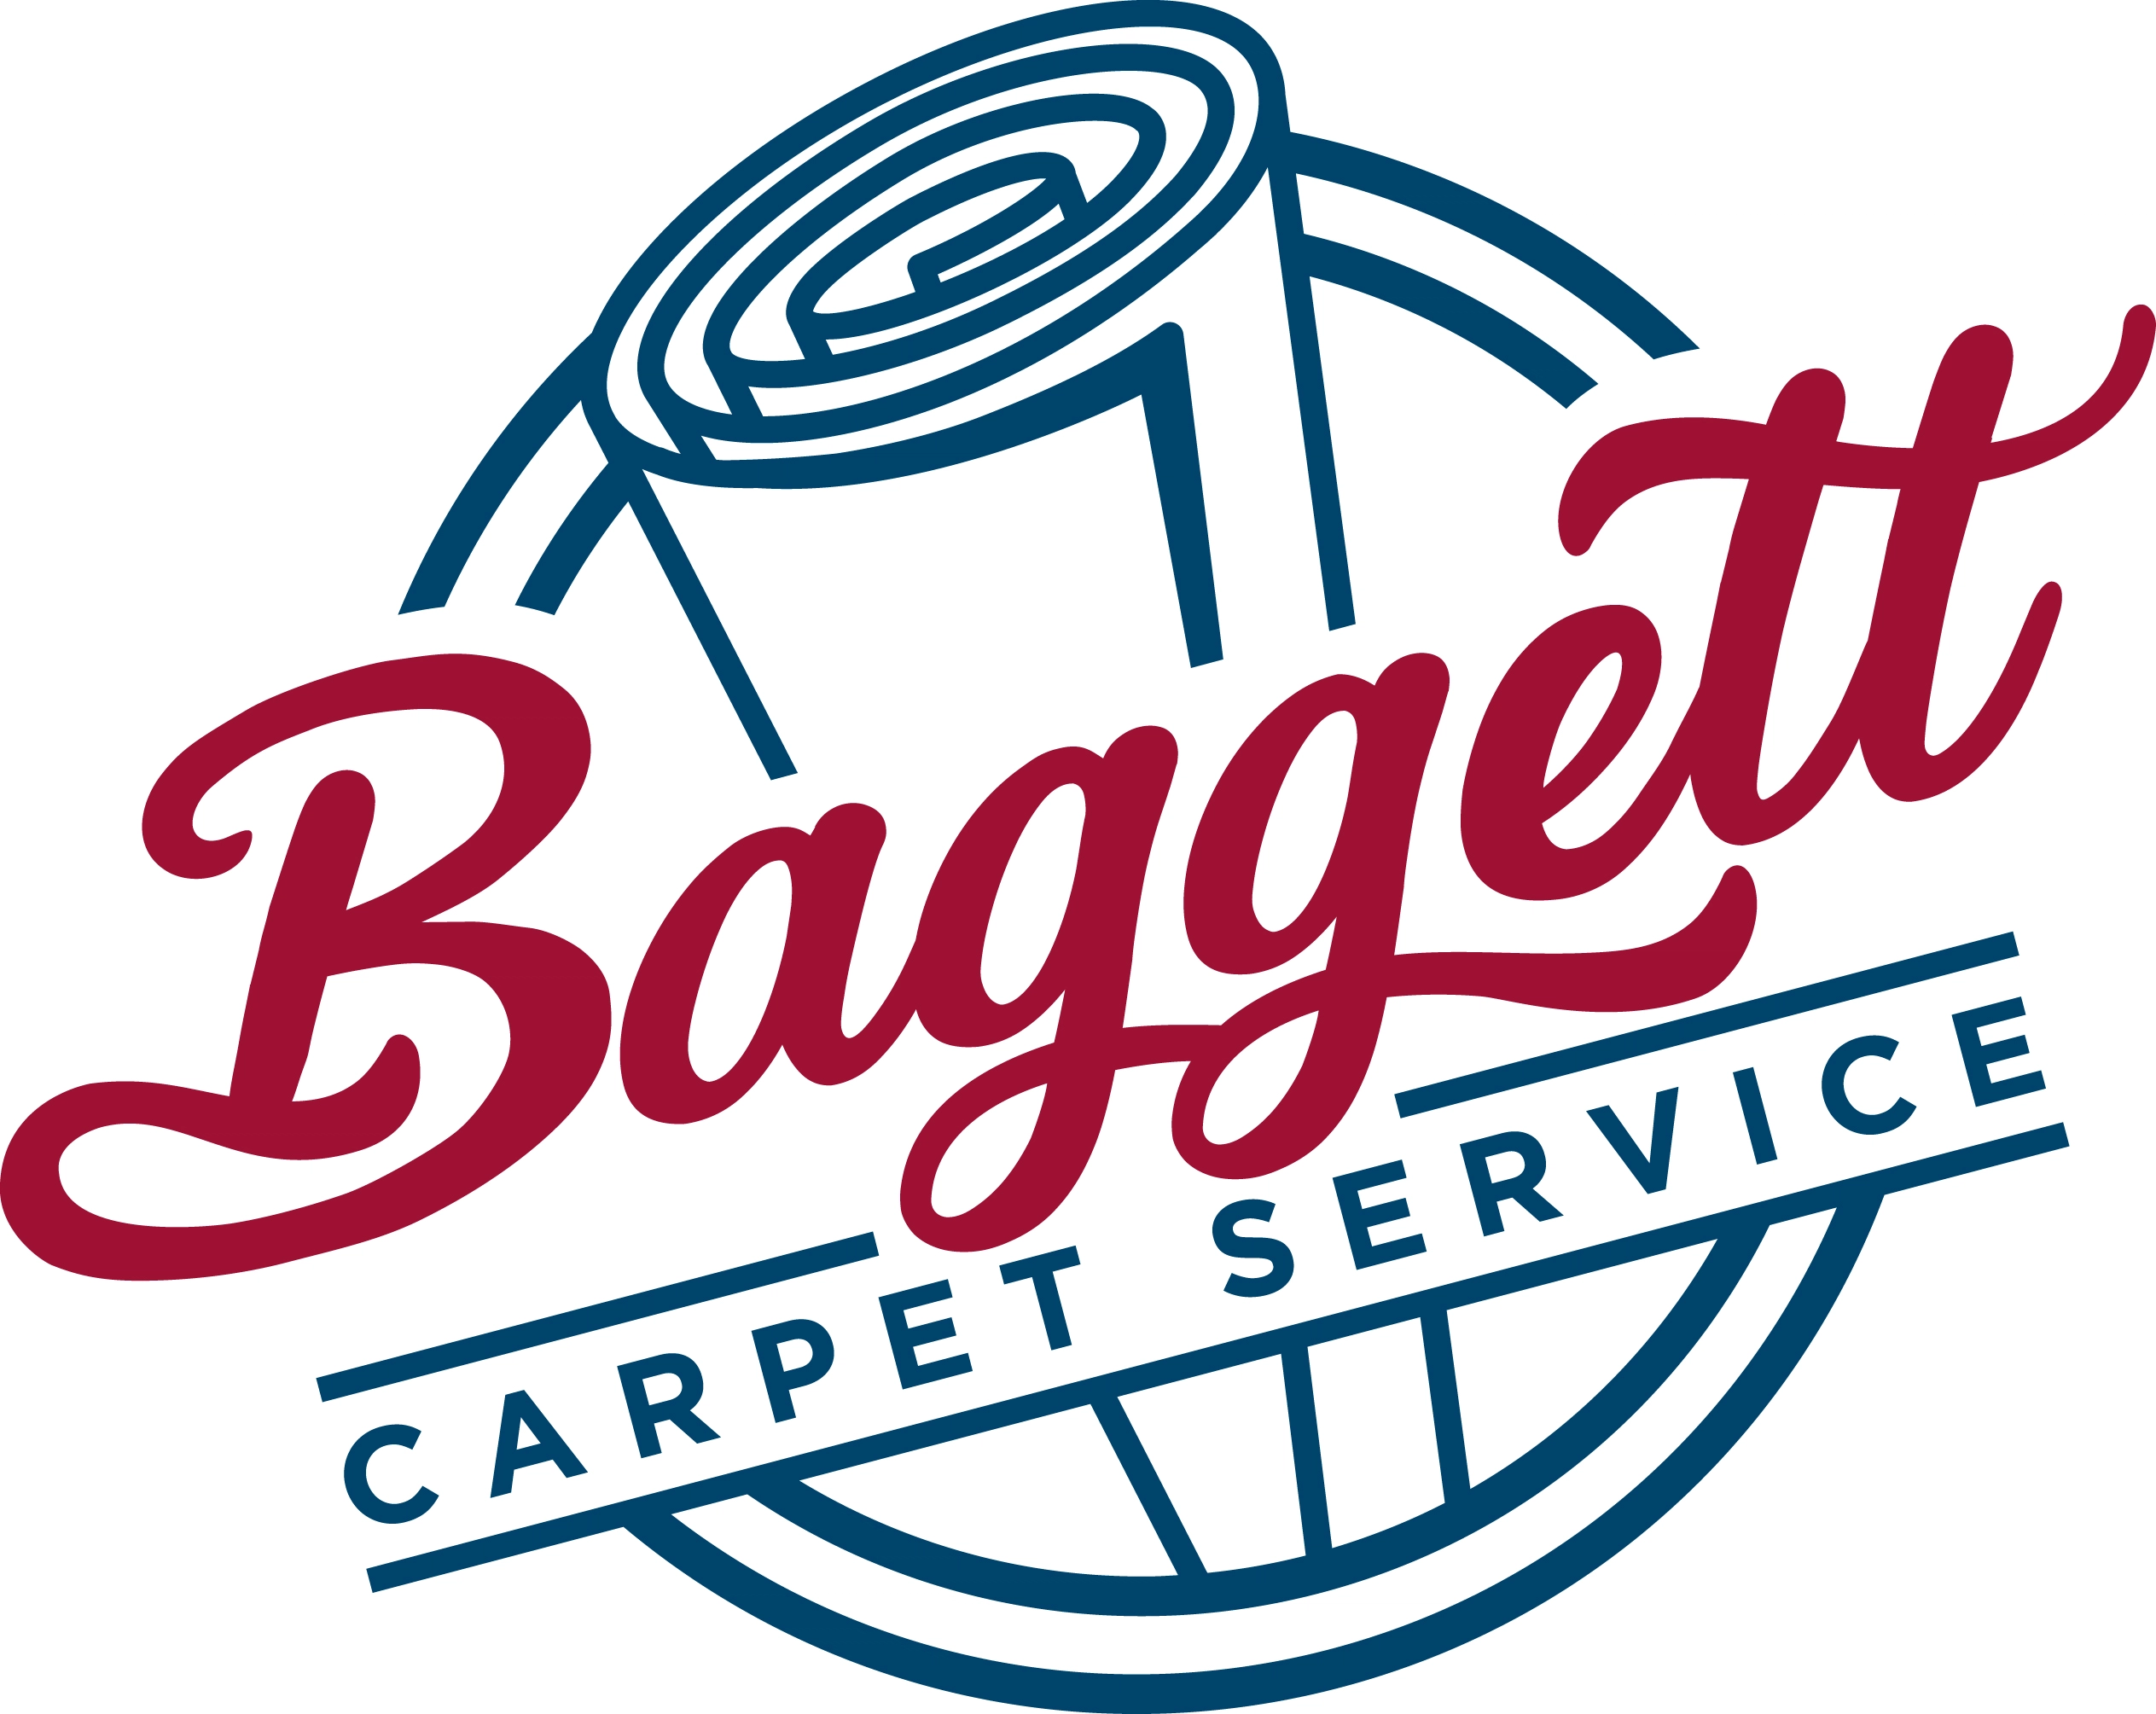 Baggett Carpet Service Logo